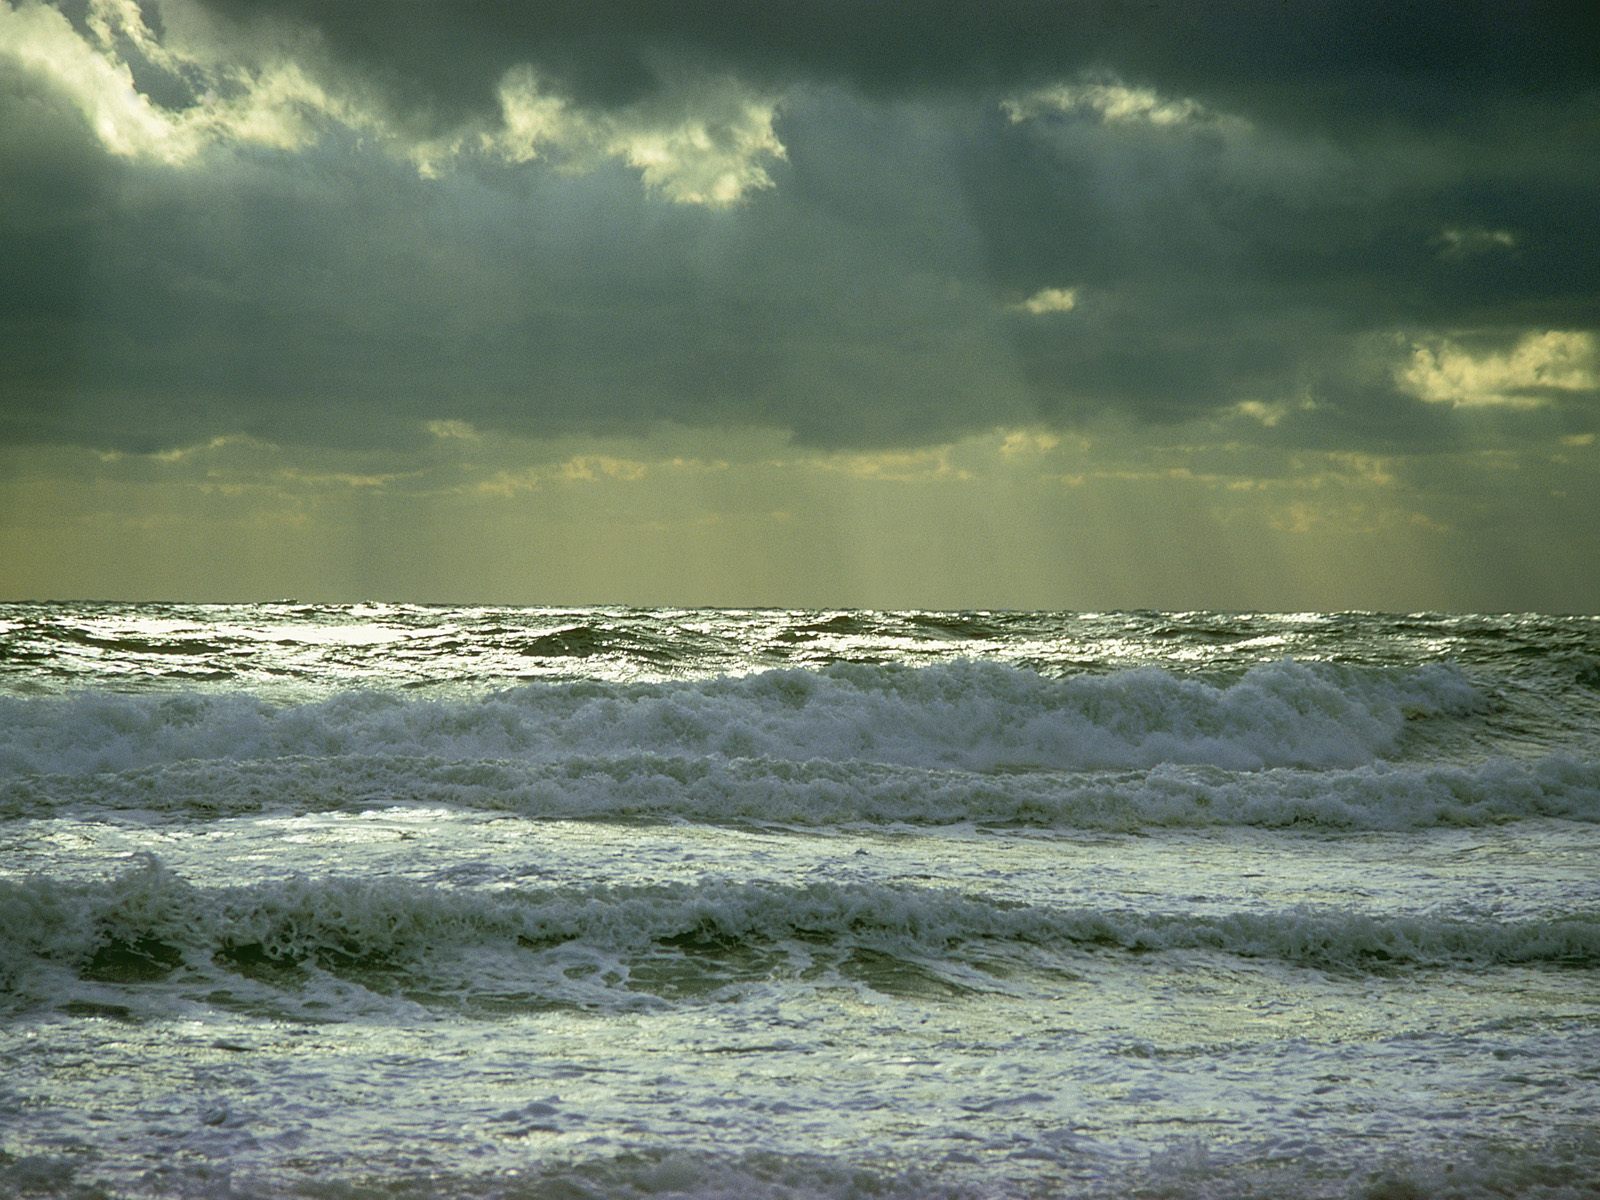 Берег океана в шторм. Северное море шторм. Атлантический океан шторм. Бурное море. Море в непогоду.